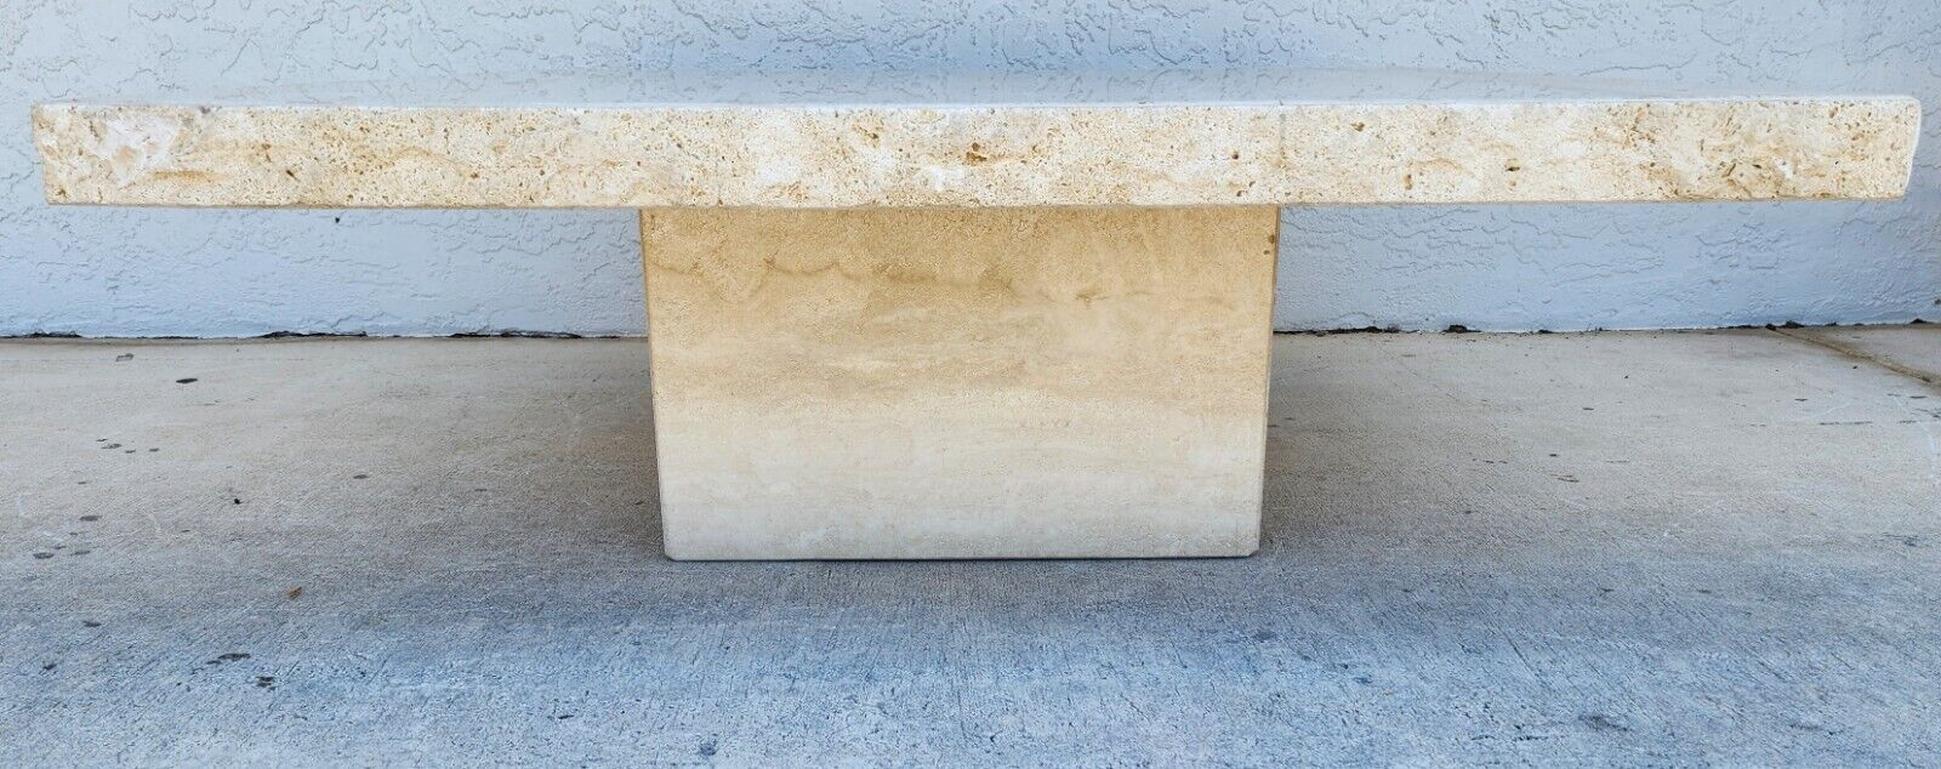 live edge stone coffee table